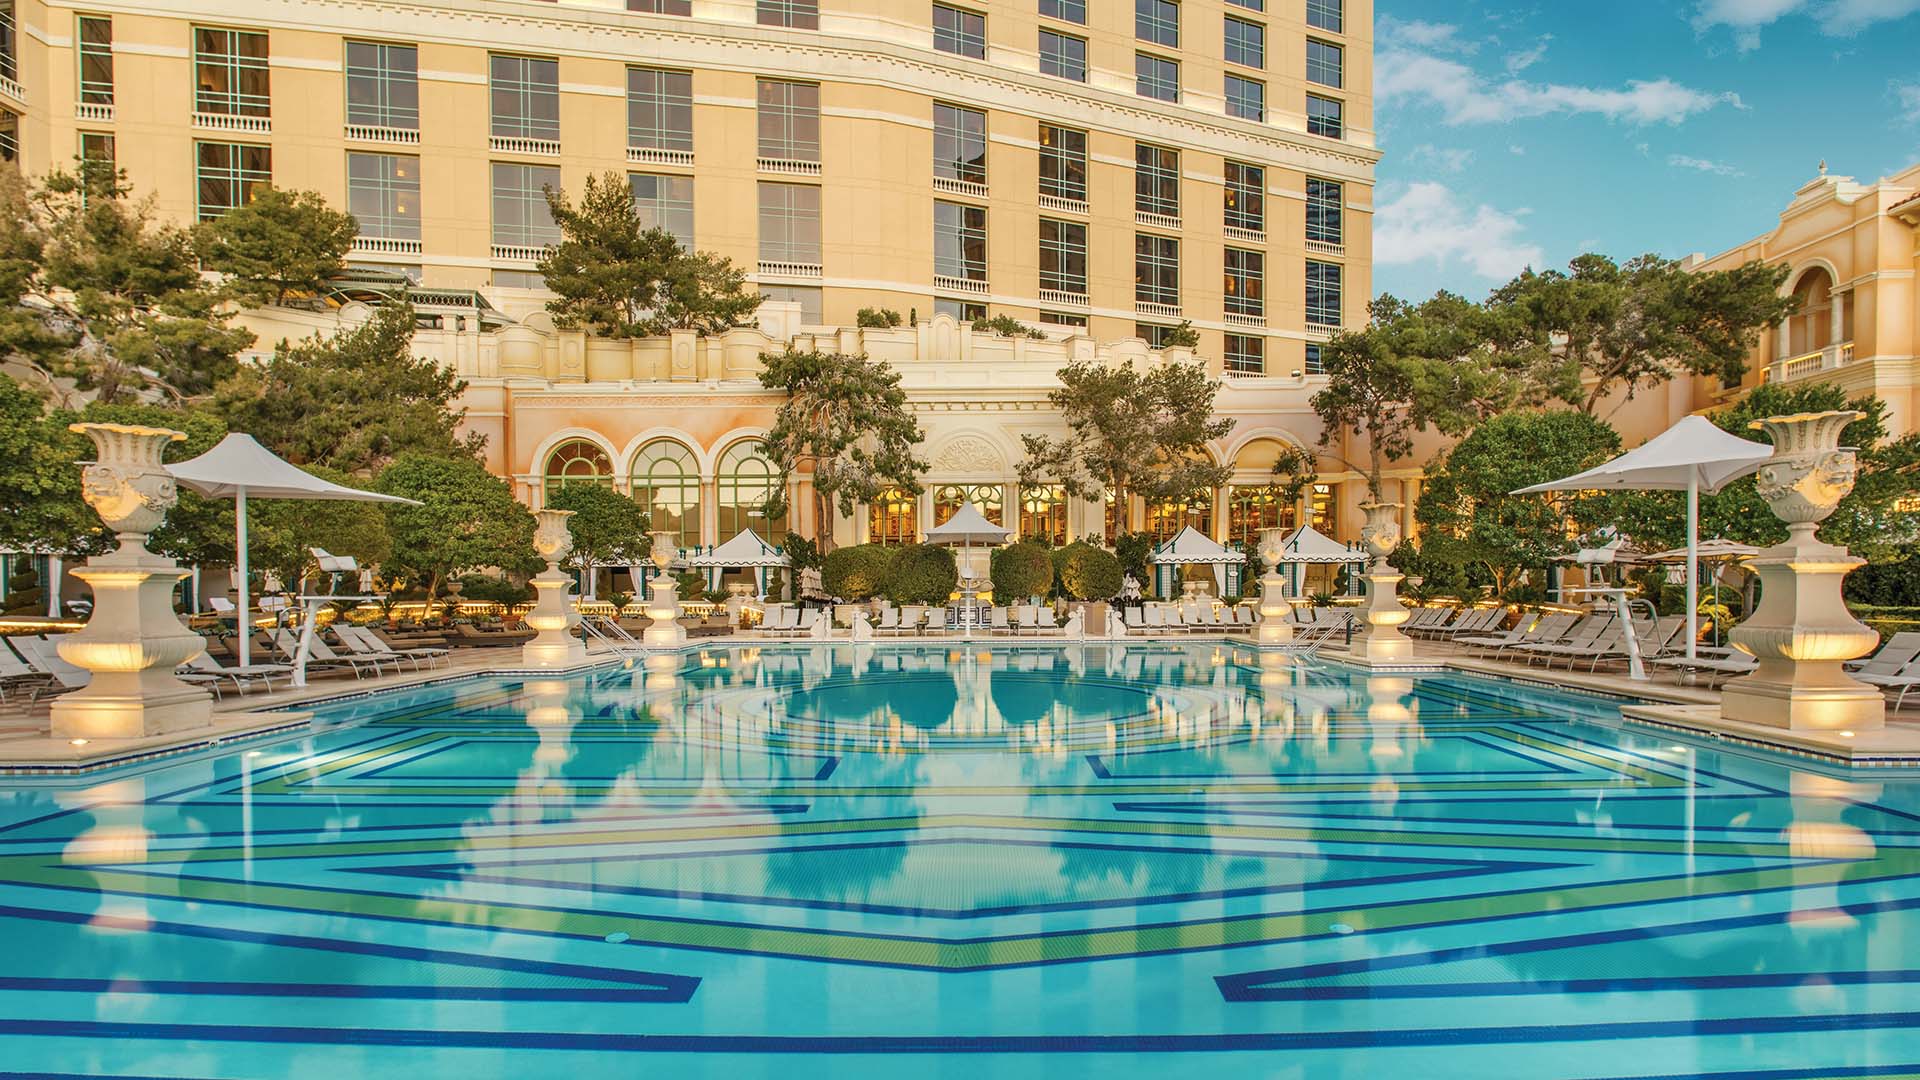 A swimming pool at Bellagio Resort & Casino in Las Vegas